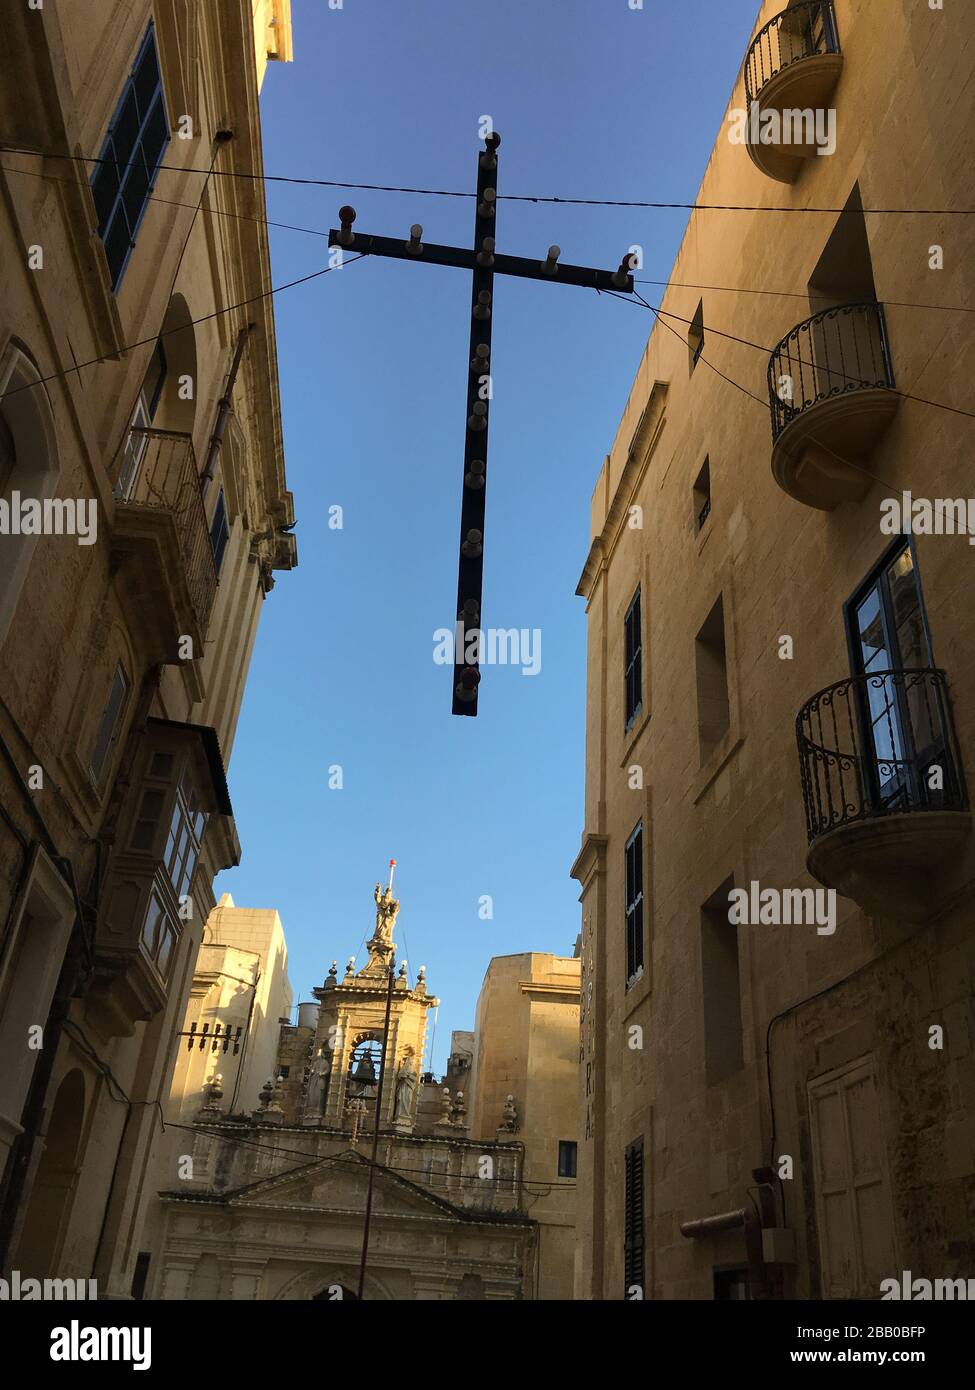 Crosses suspended from buildings, for religious festivals, in Valletta, in Malta, on 28 February 2020. Stock Photo